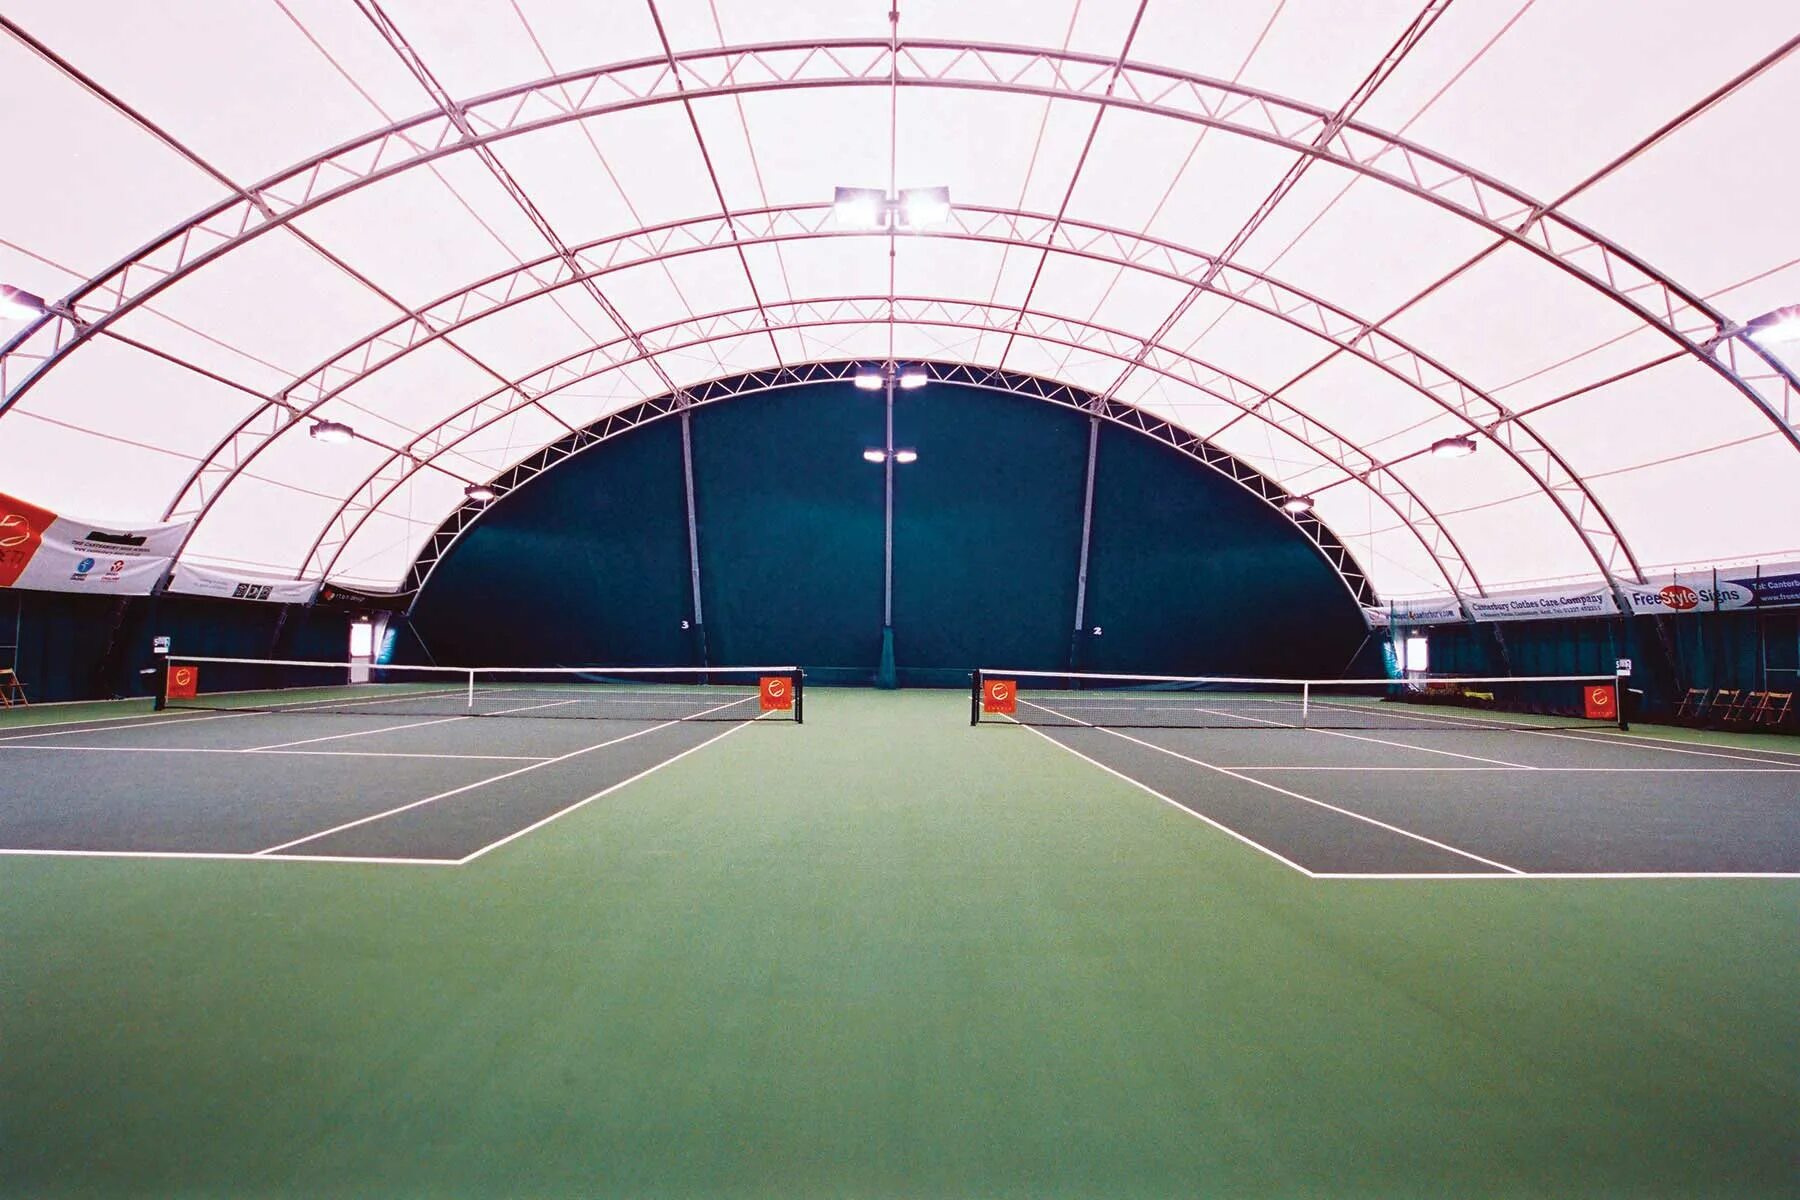 Сад имени Баумана теннисный корт. Стадион Ангара легкоатлетический манеж. Теннисный корт 40 на 20. Теннисный корт Гамильтон.